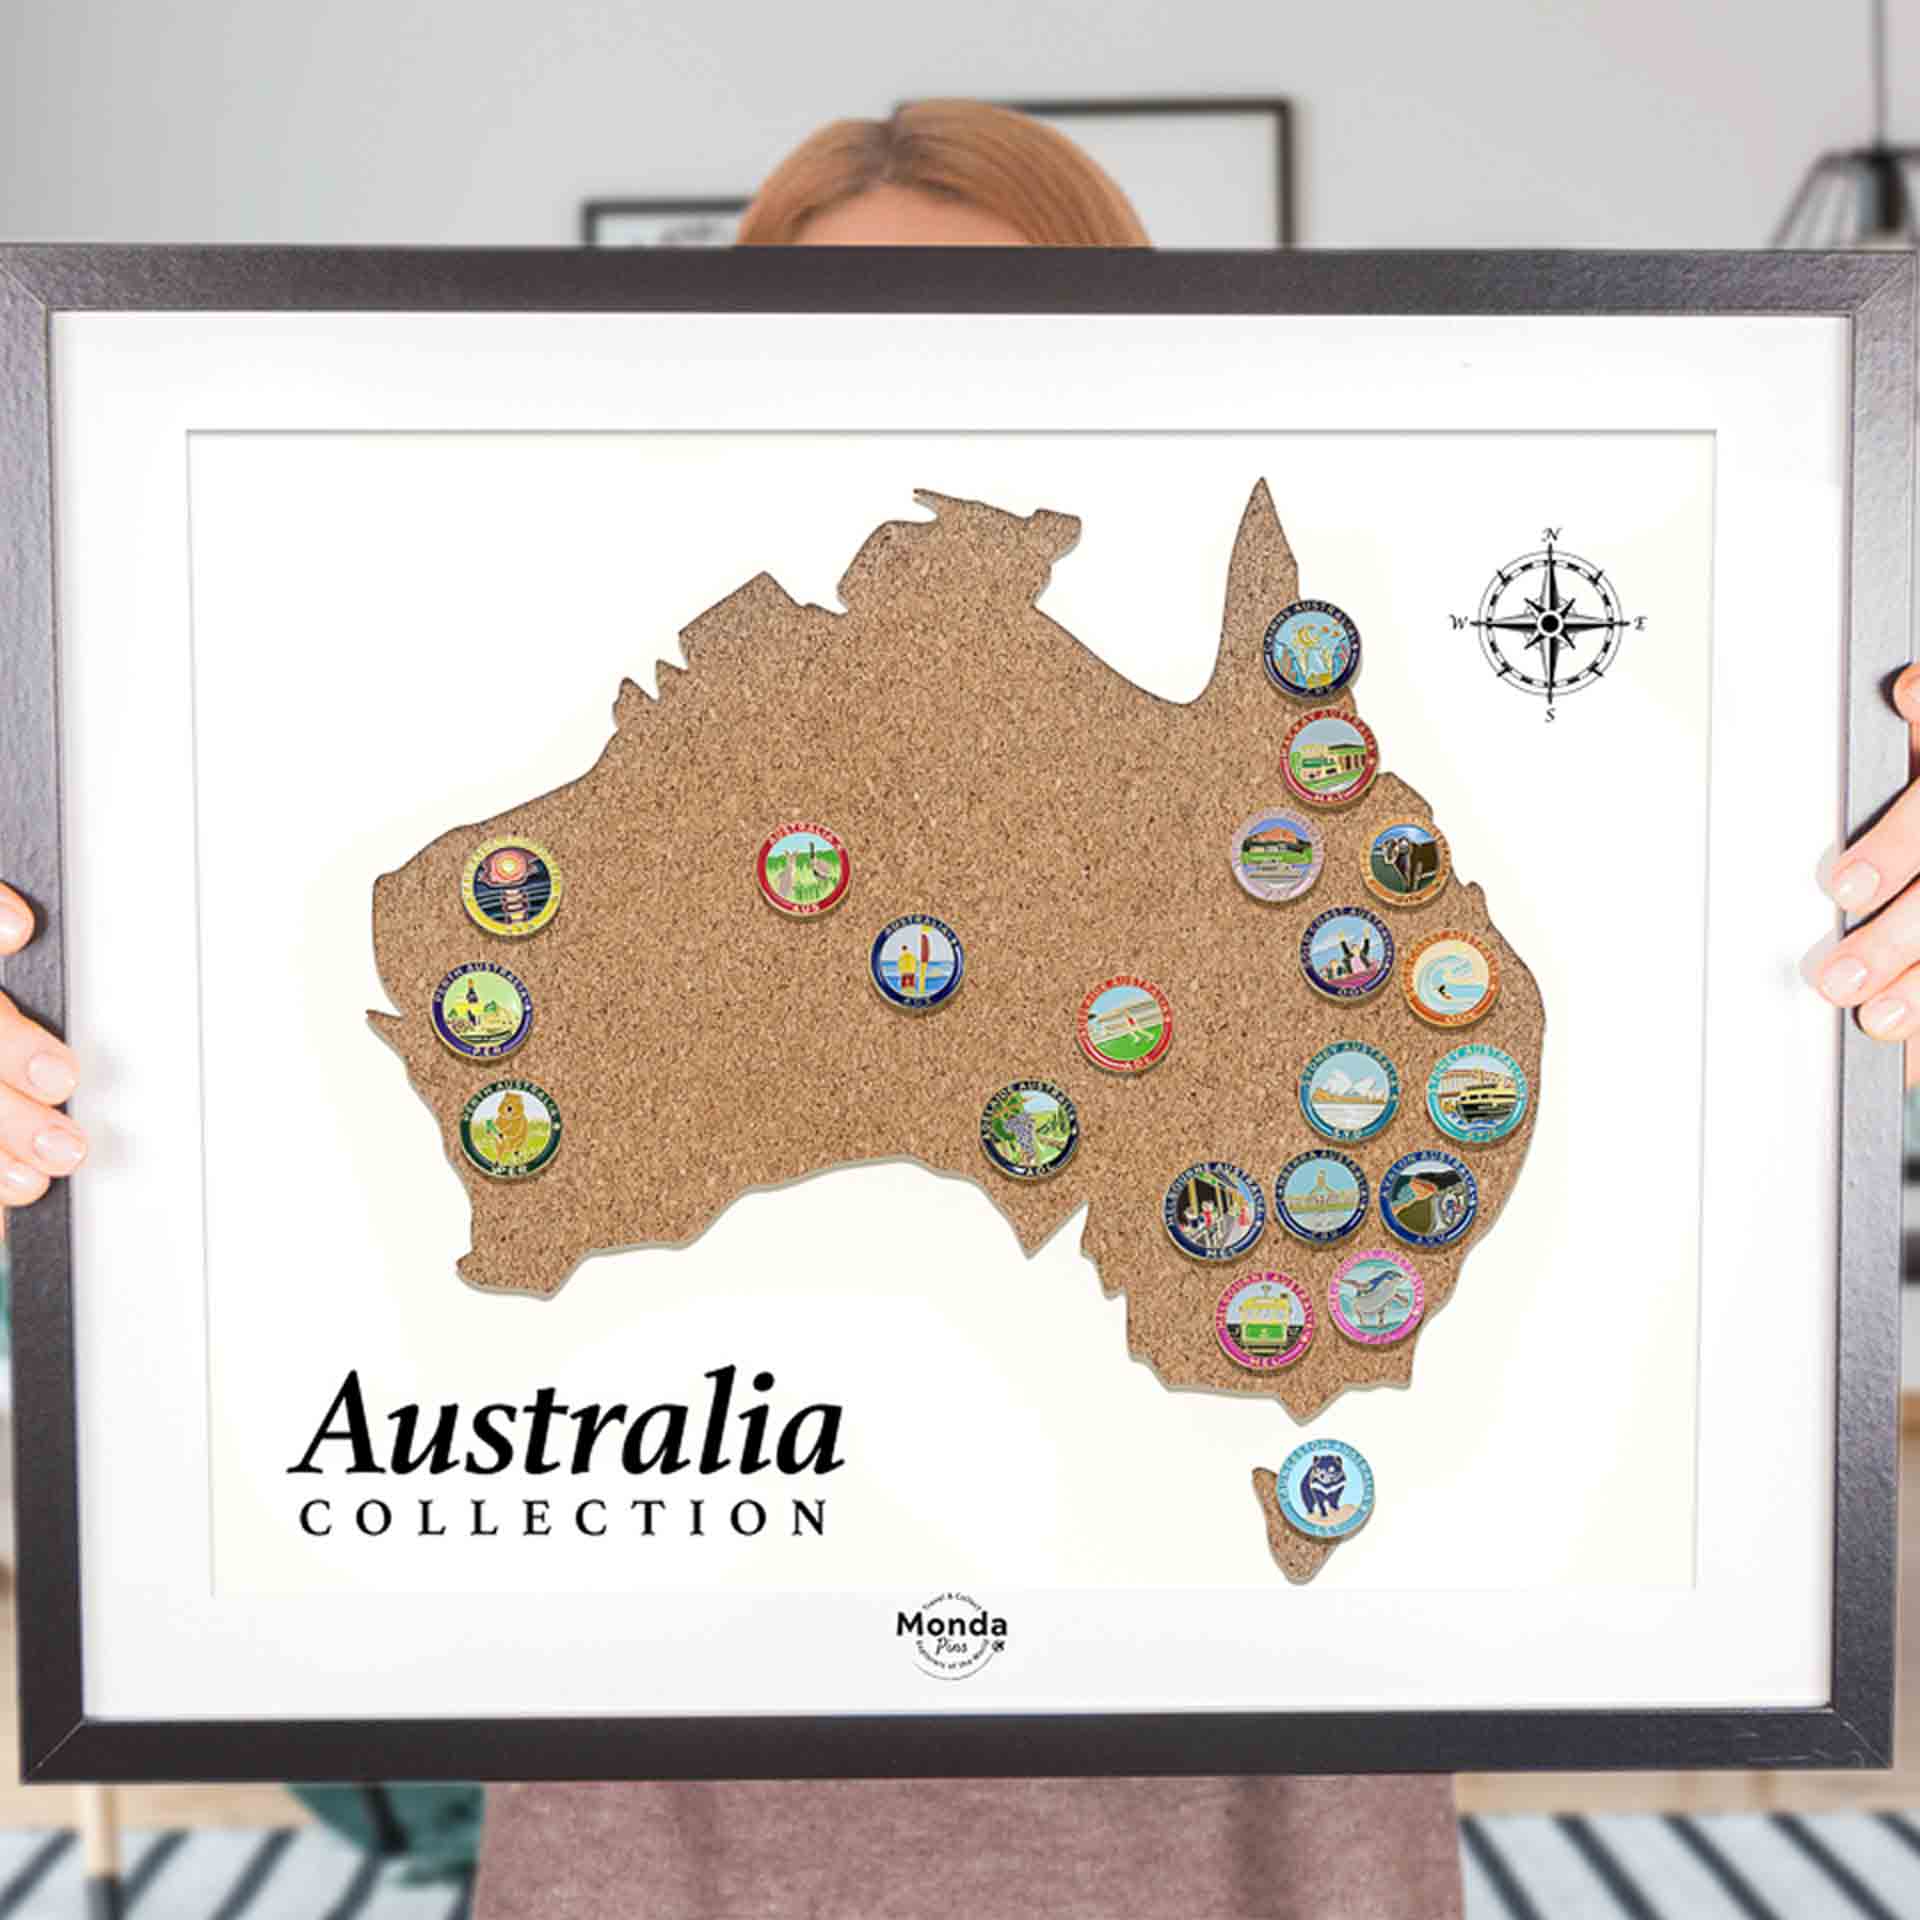 Blue Penguins Melbourne Australia Travel Pin Collection